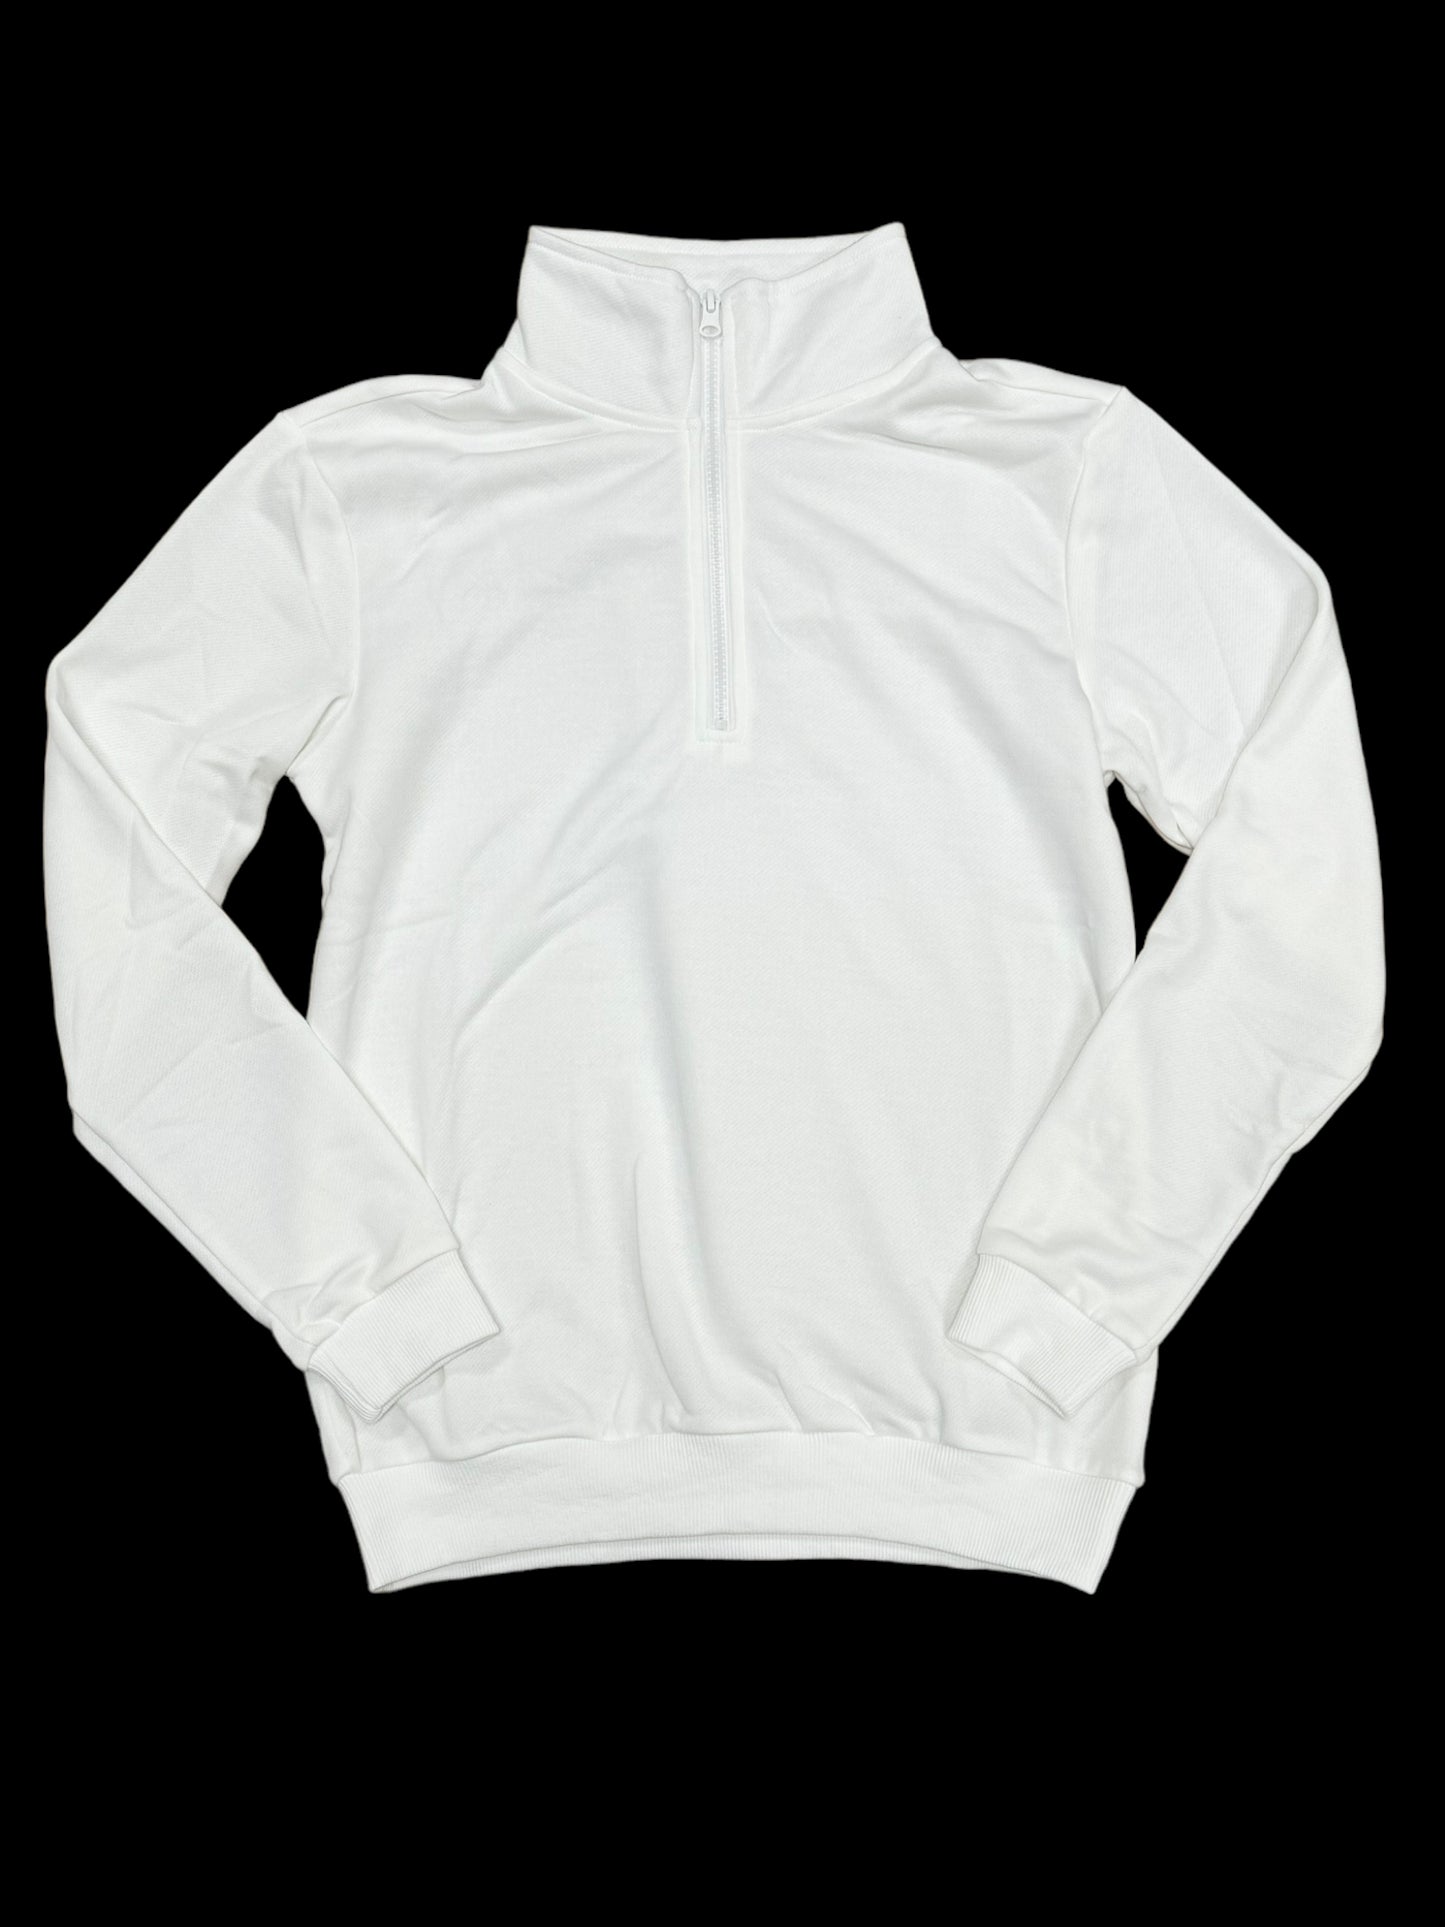 Adult Unisex 1/4 Zip Sweatshirt Sublimation